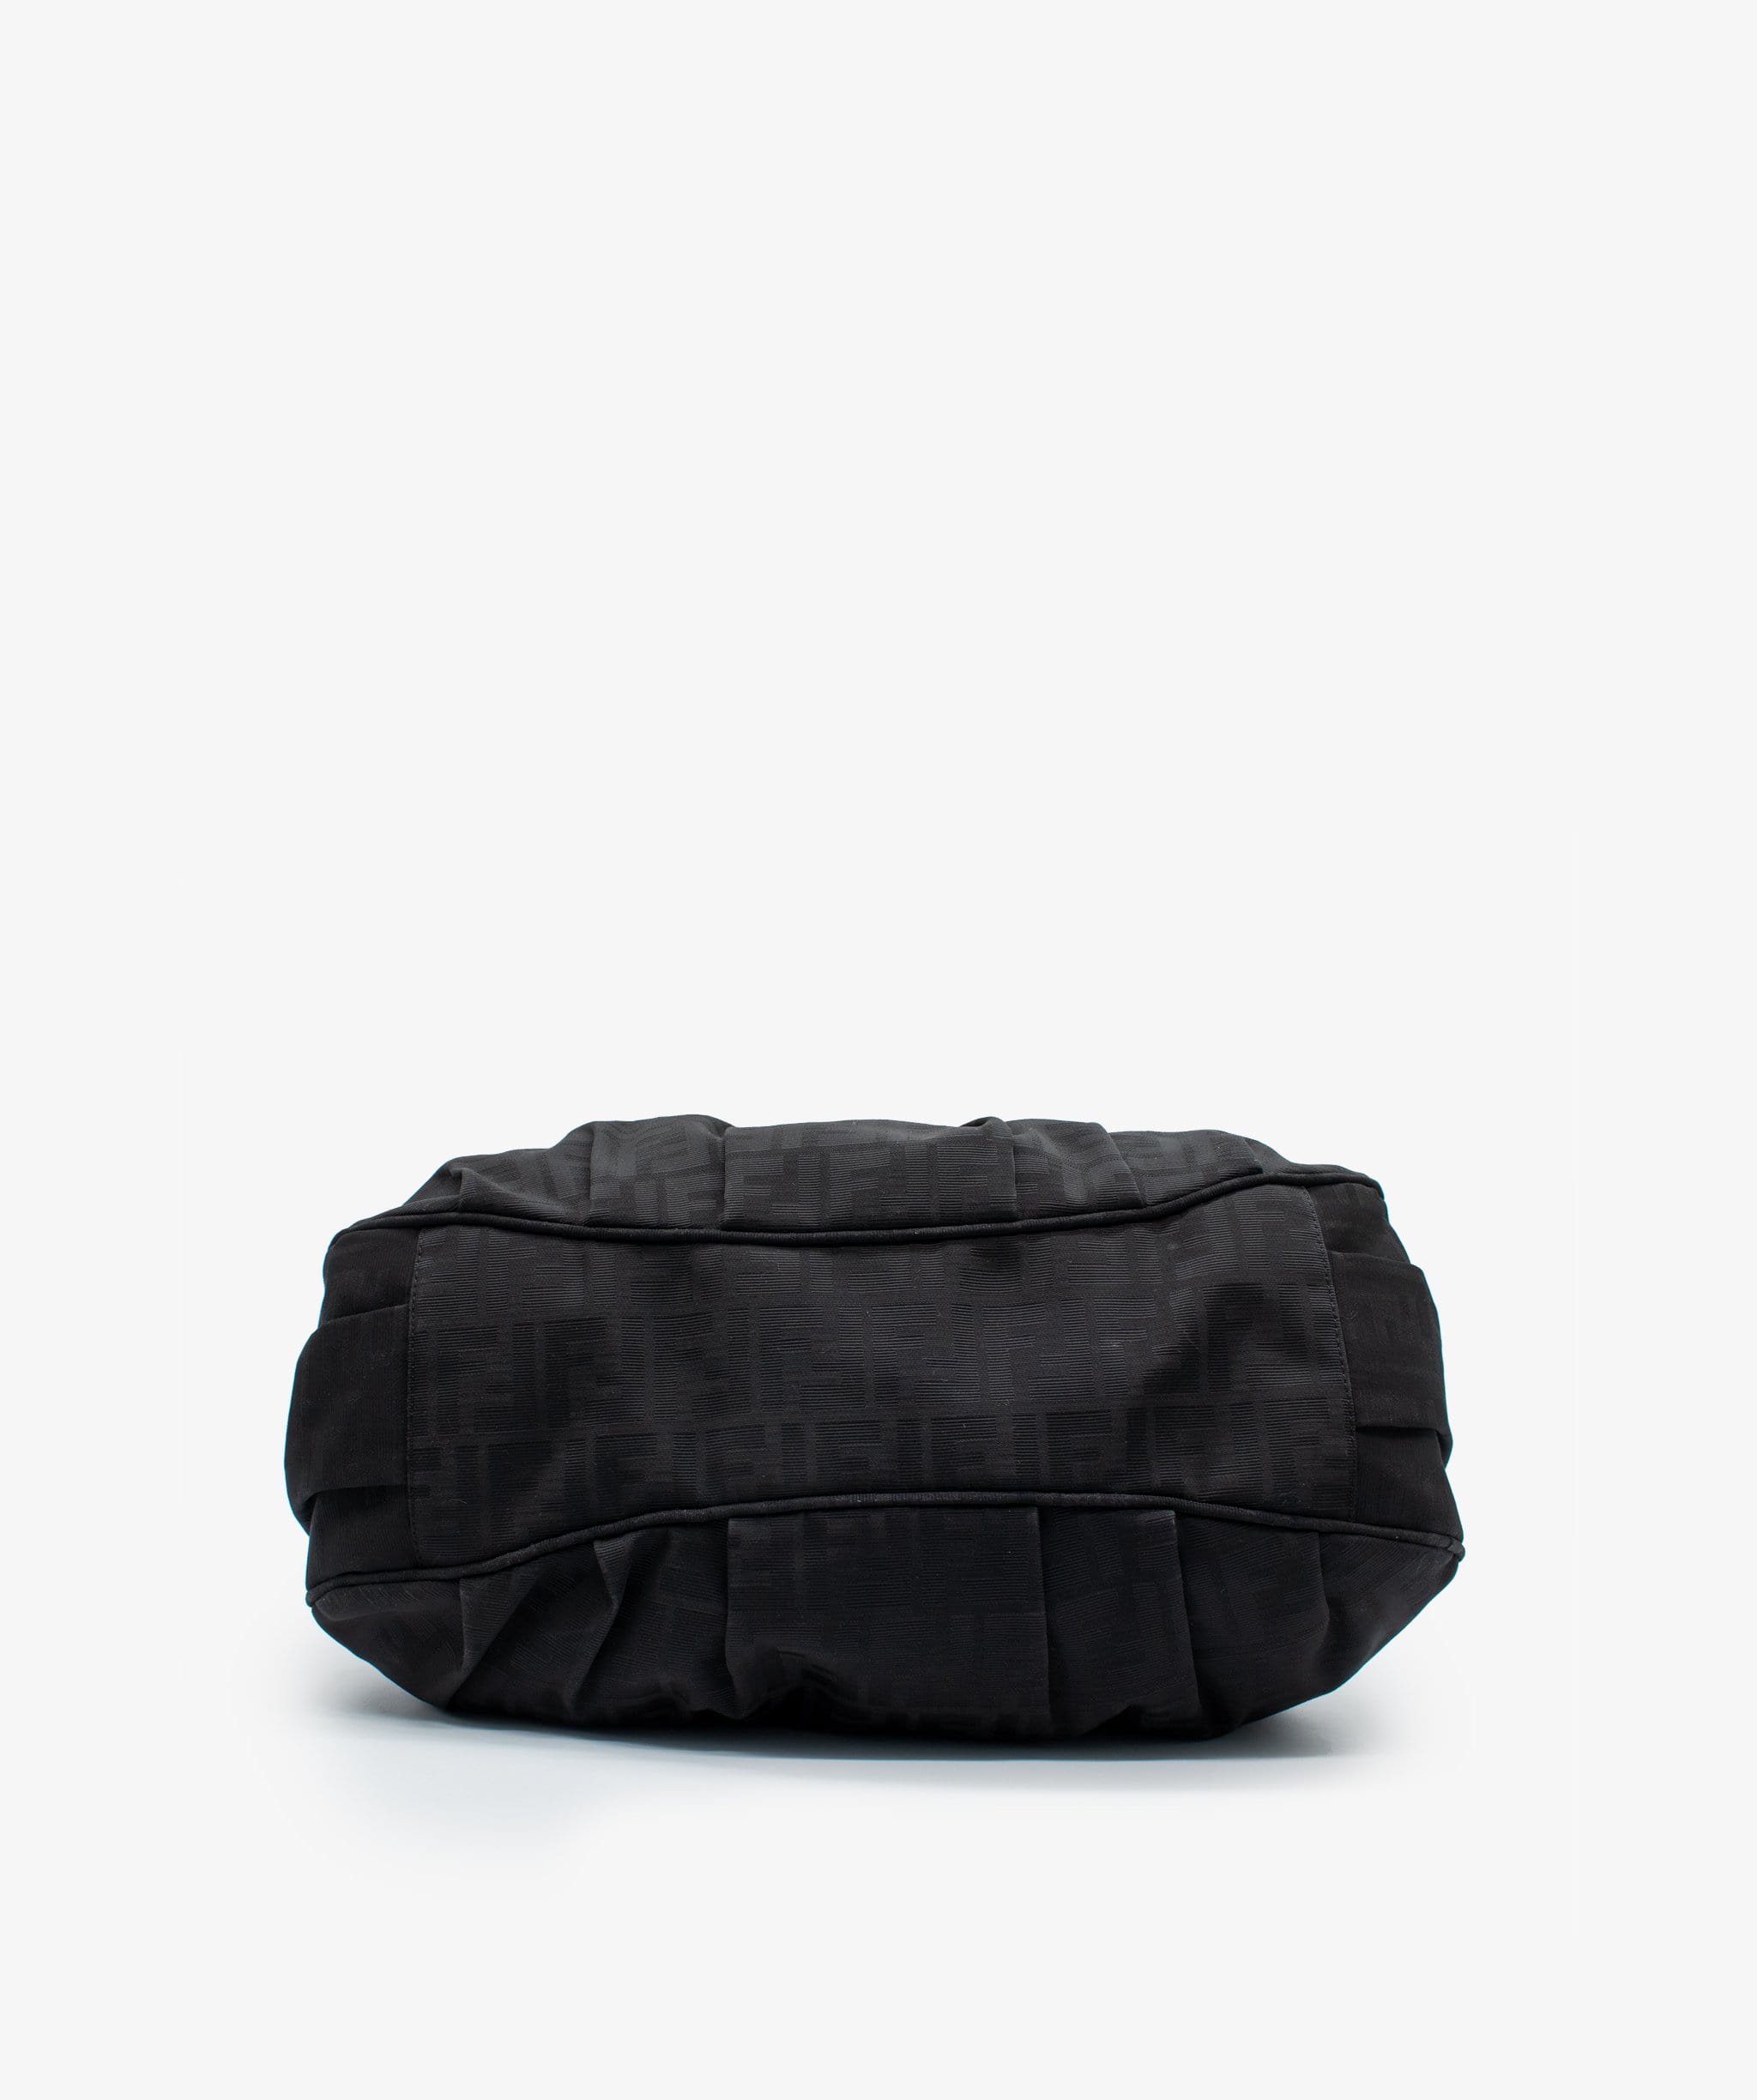 Fendi Fendi Mia Black Shoulder bag RJC1078